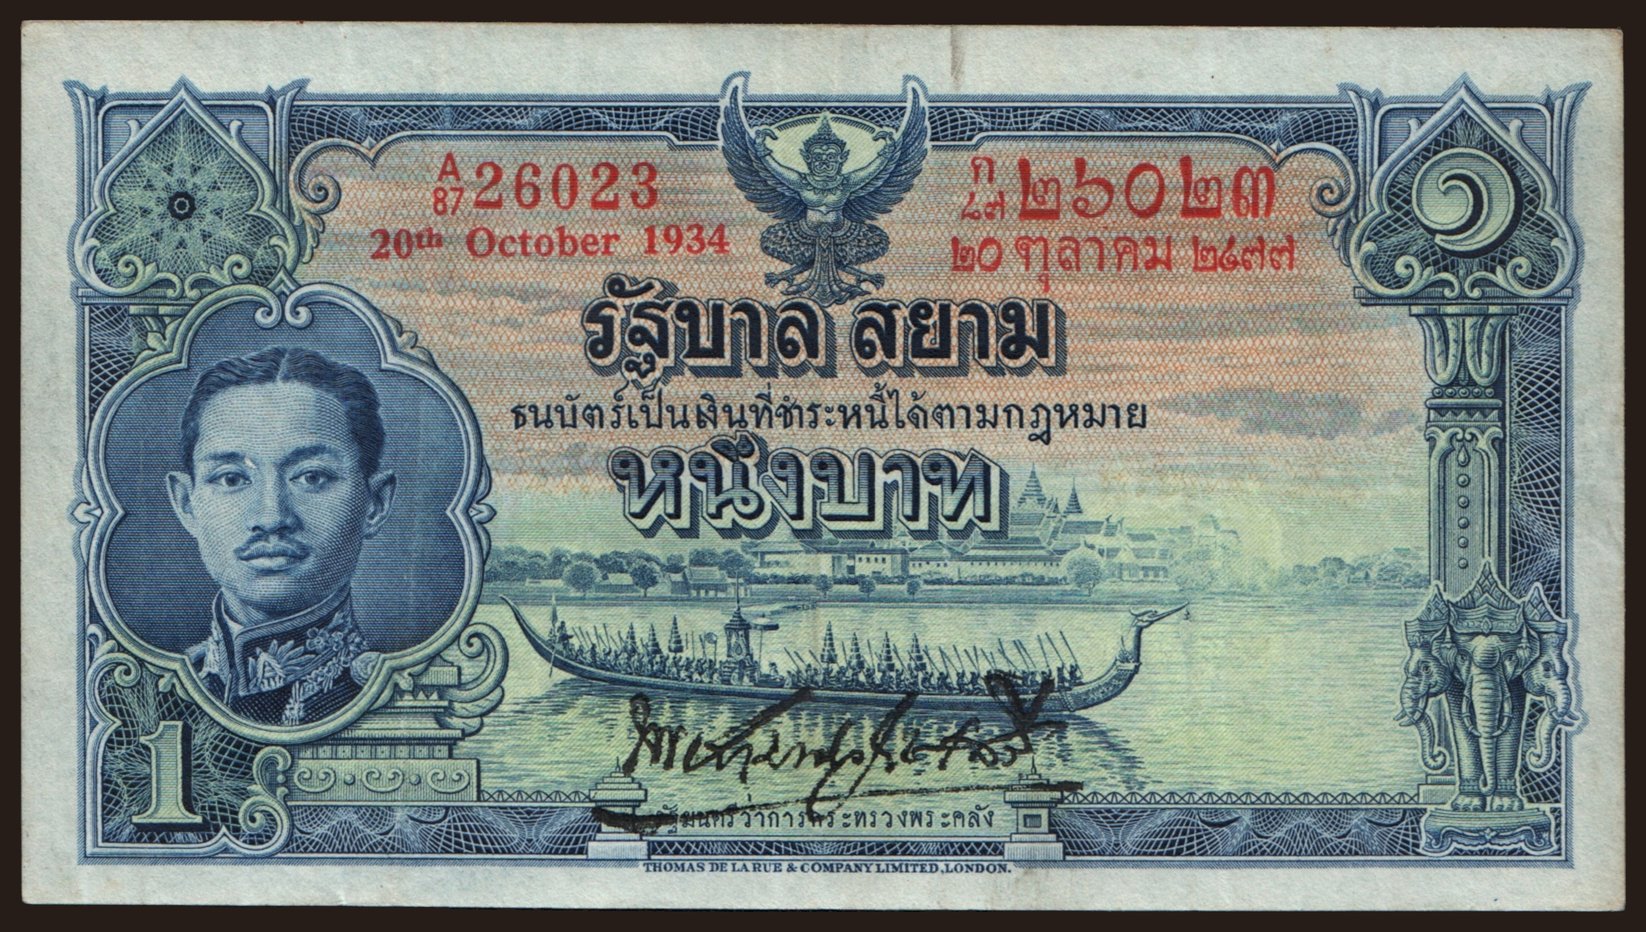 1 baht, 1934